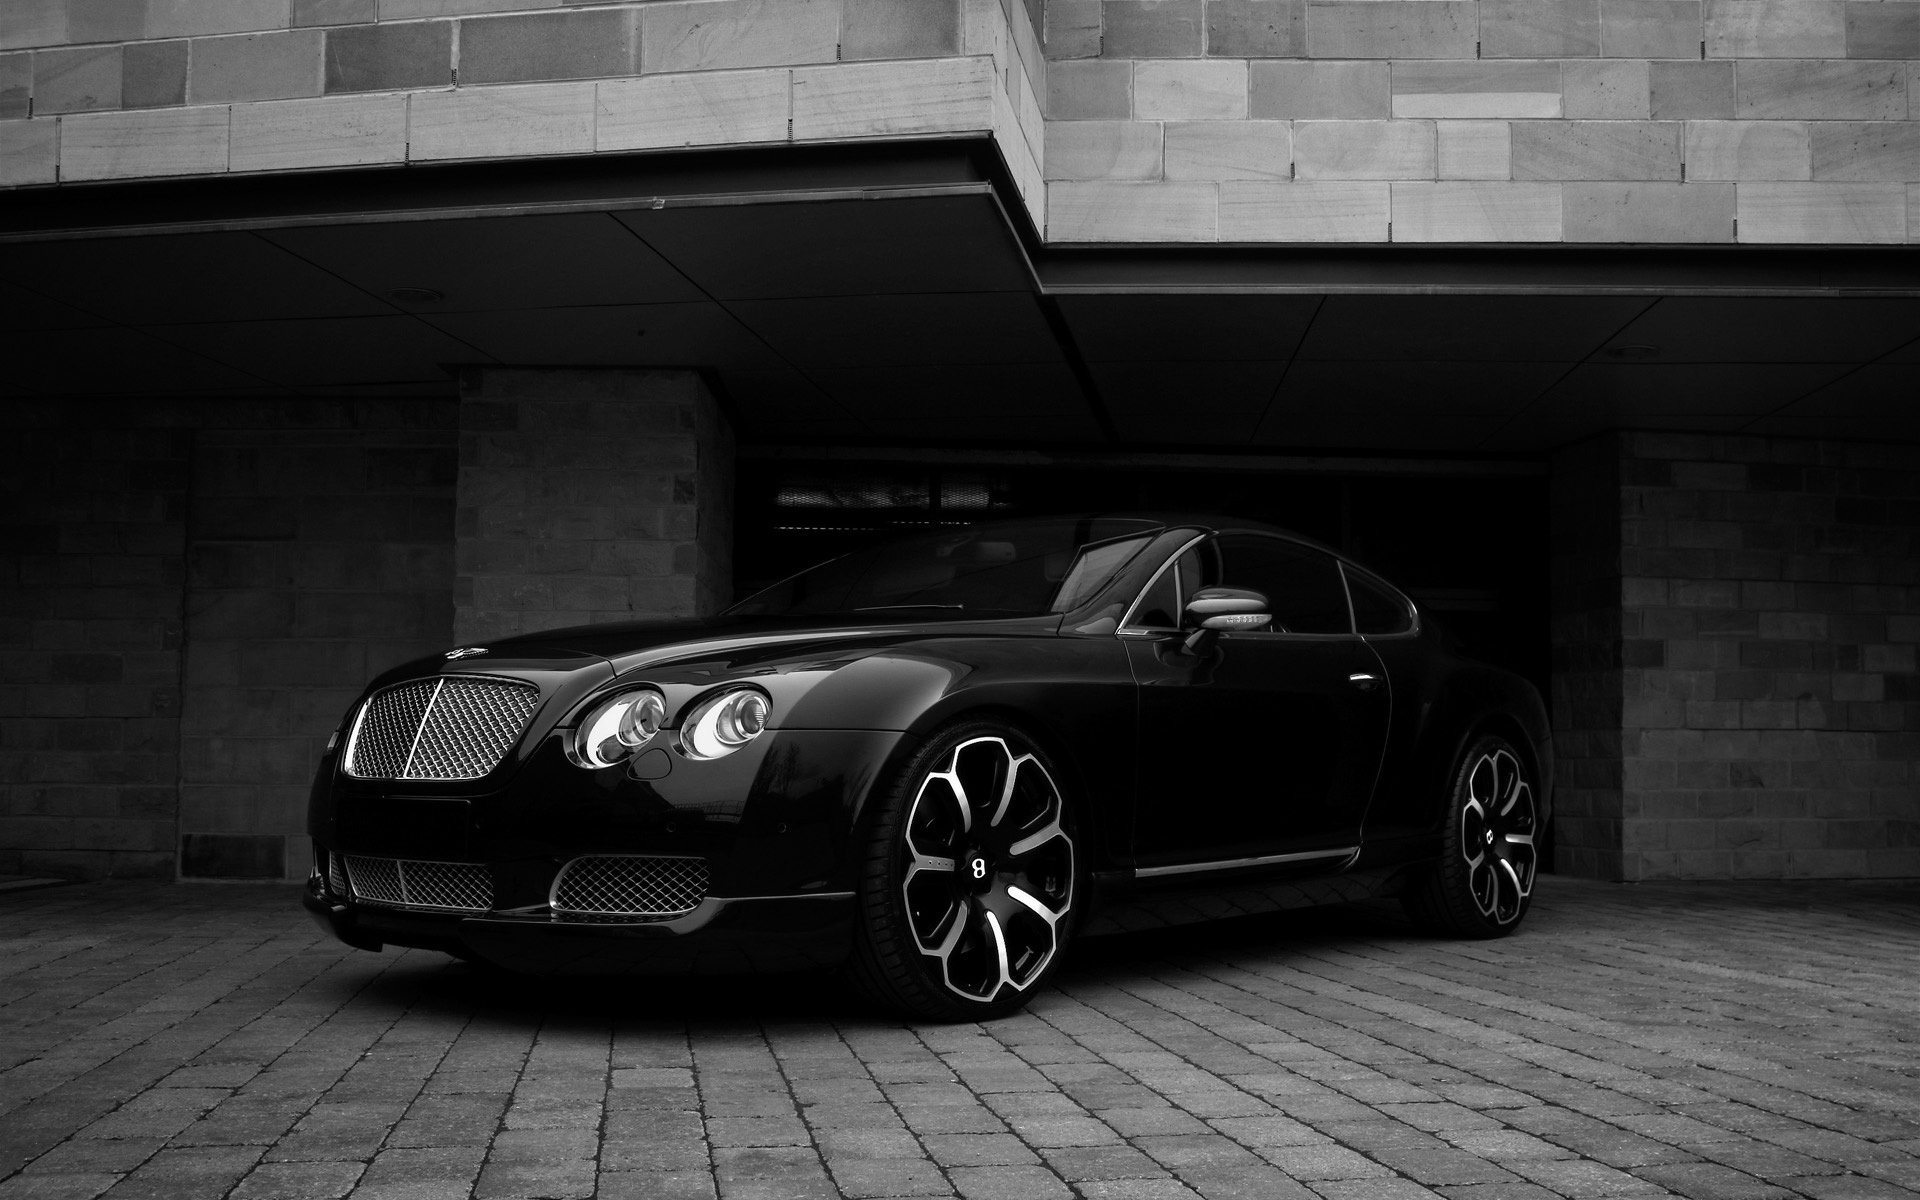 Bentley GTS Black Edition Project Kahn 2008 Overhang for 1920 x 1200 widescreen resolution